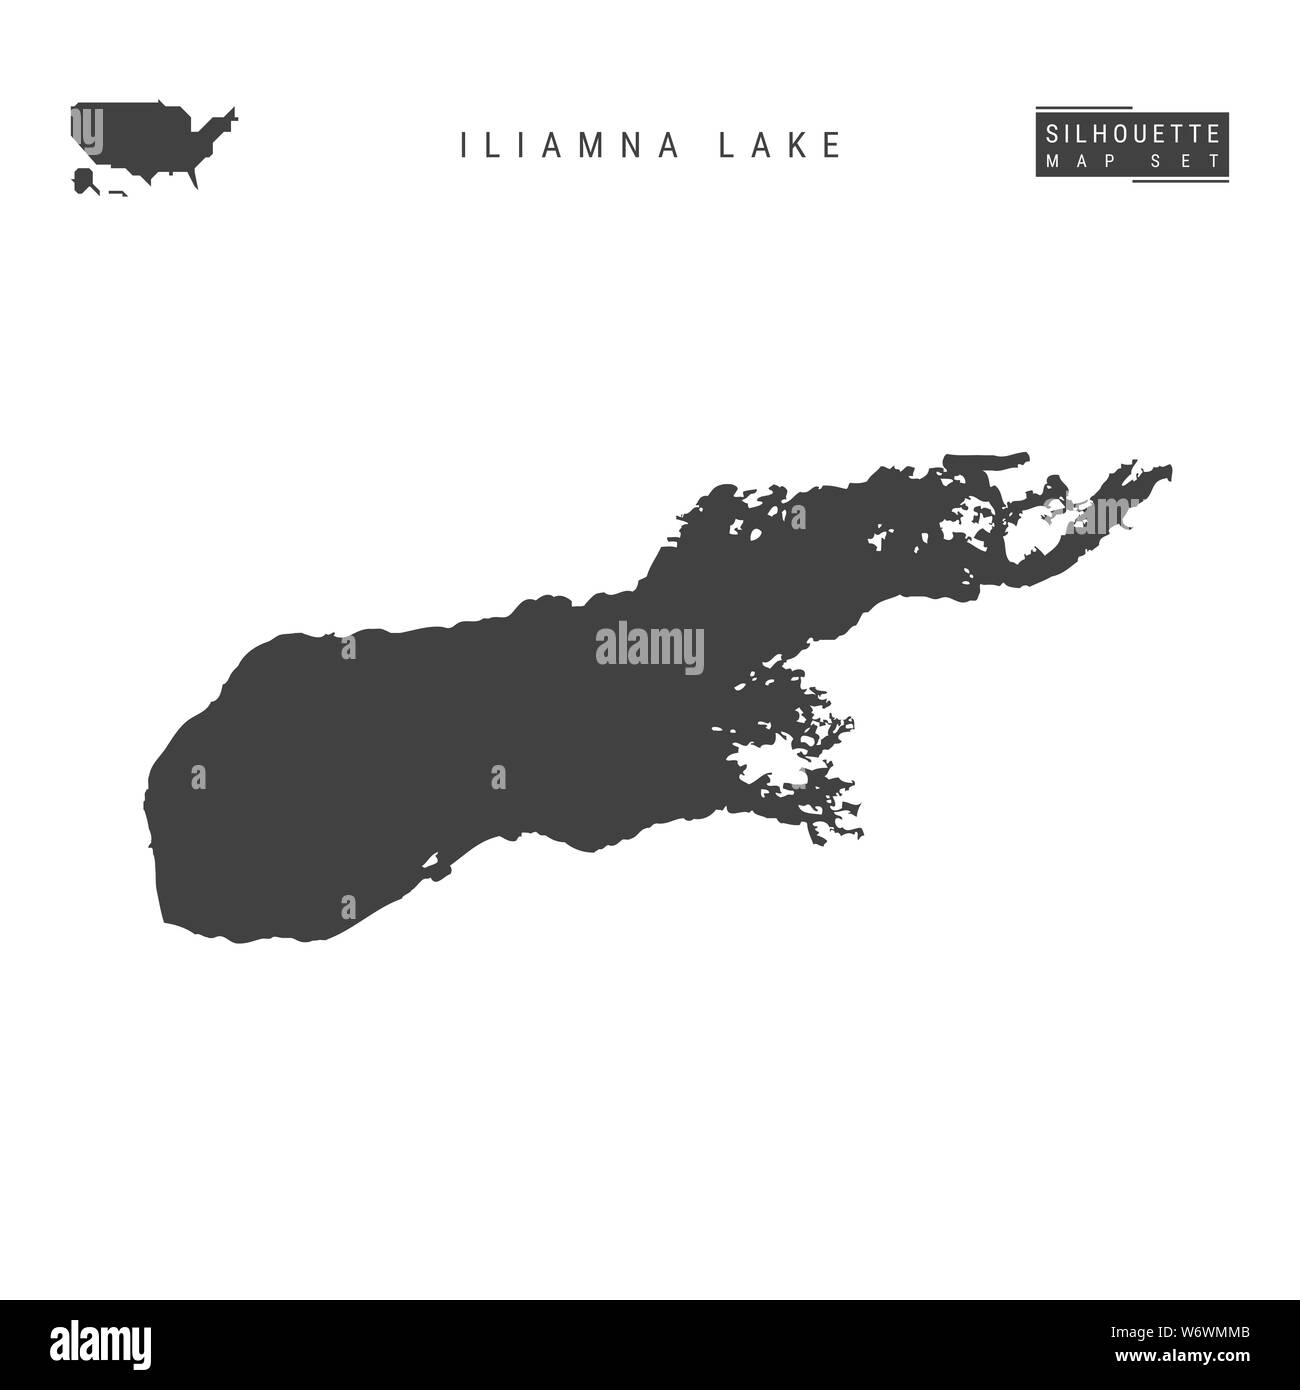 Iliamna Lake Blank Map Isolated on White Background. High-Detailed Black Silhouette Map of Iliamna Lake. Stock Photo